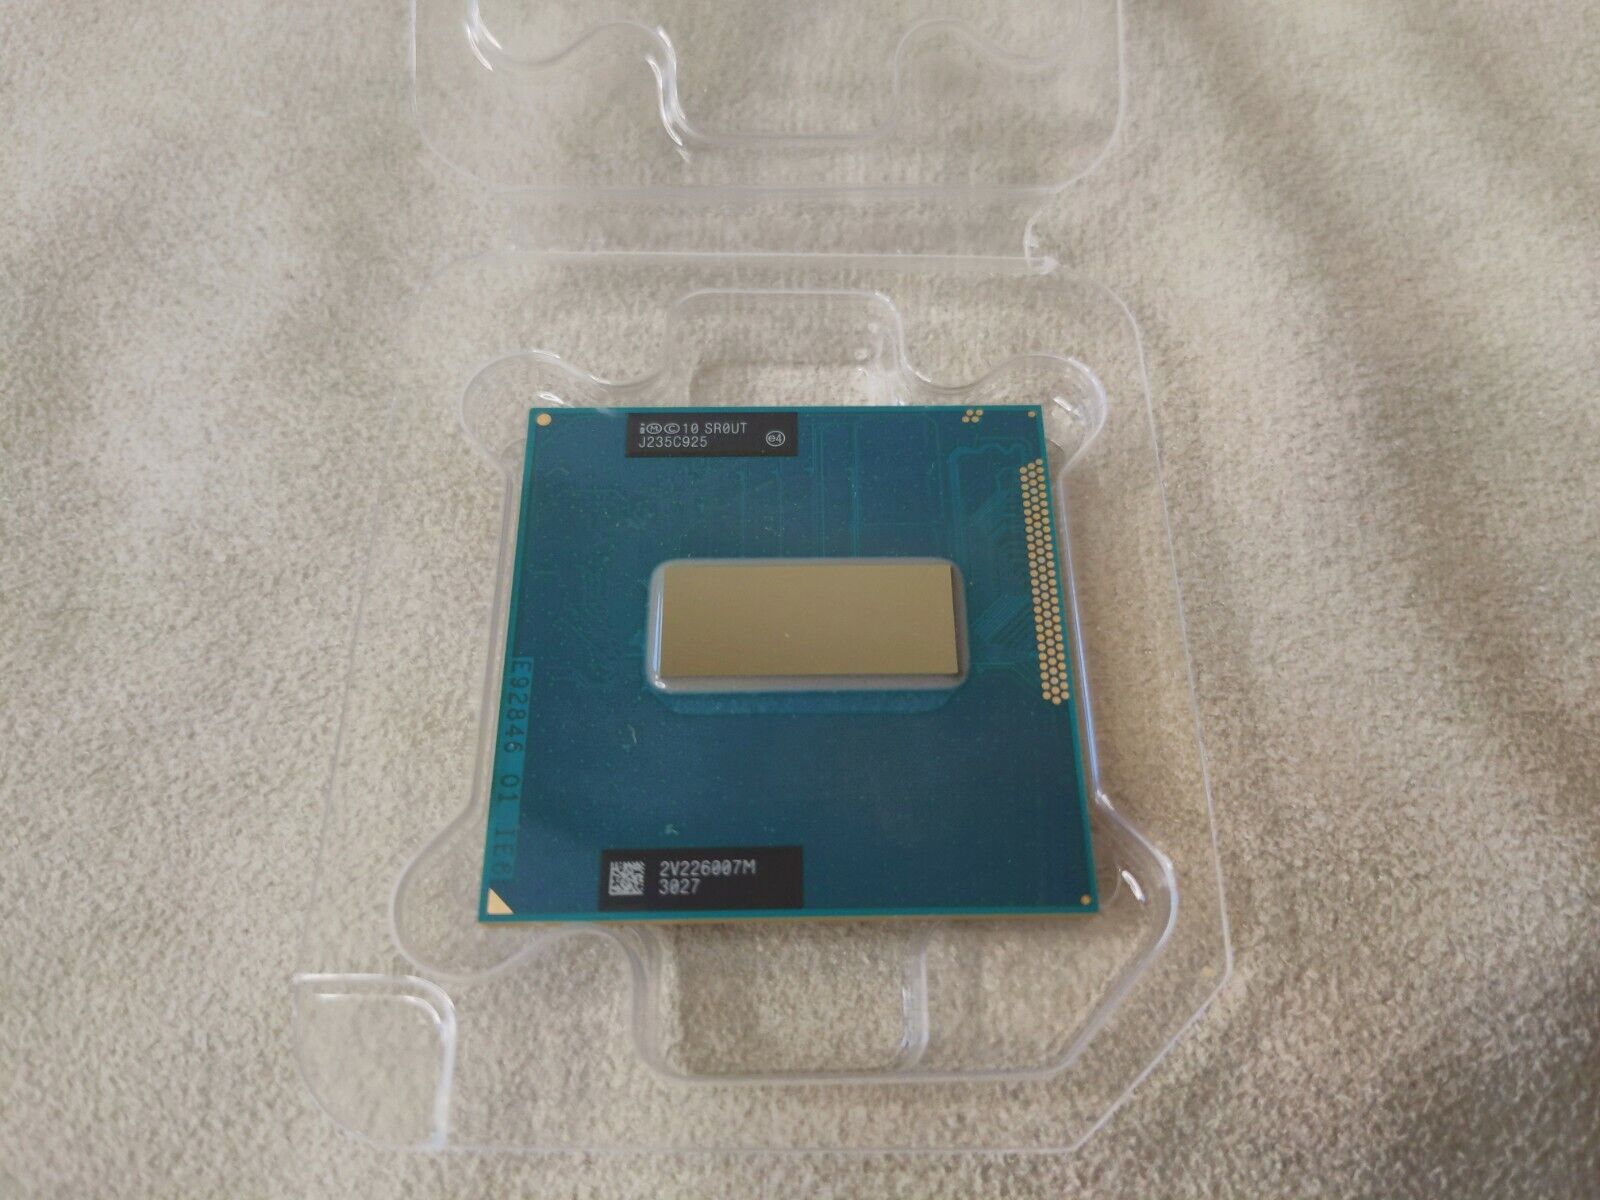 Intel Core i7-3840QM Quad-Core Processor 2.8GHz 8MB cache CPU Processor SR0UT